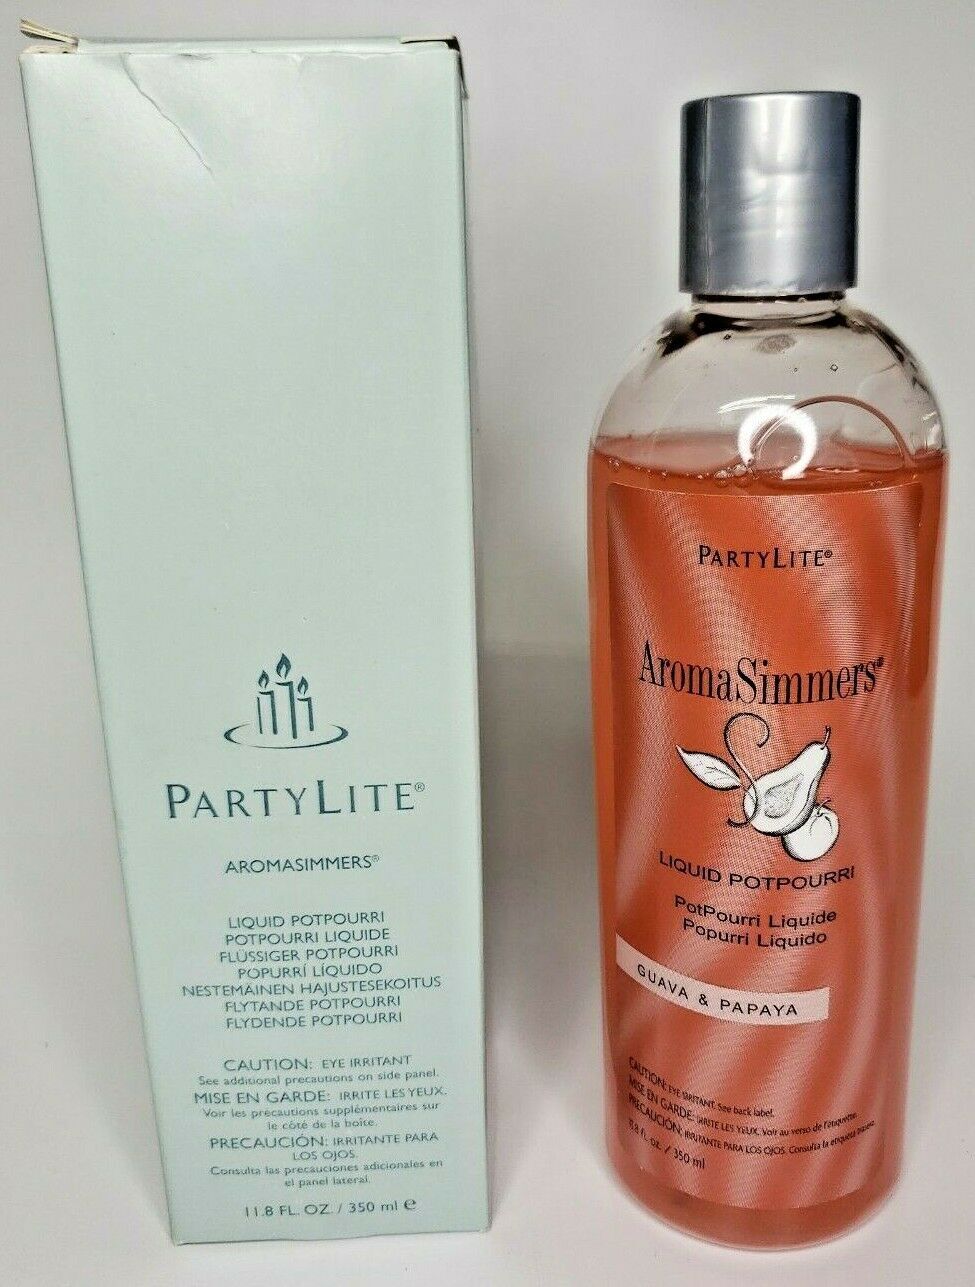 PartyLite Aromasimmers New Box Liquid Potpourri Guava & Papaya P3J/Z25329